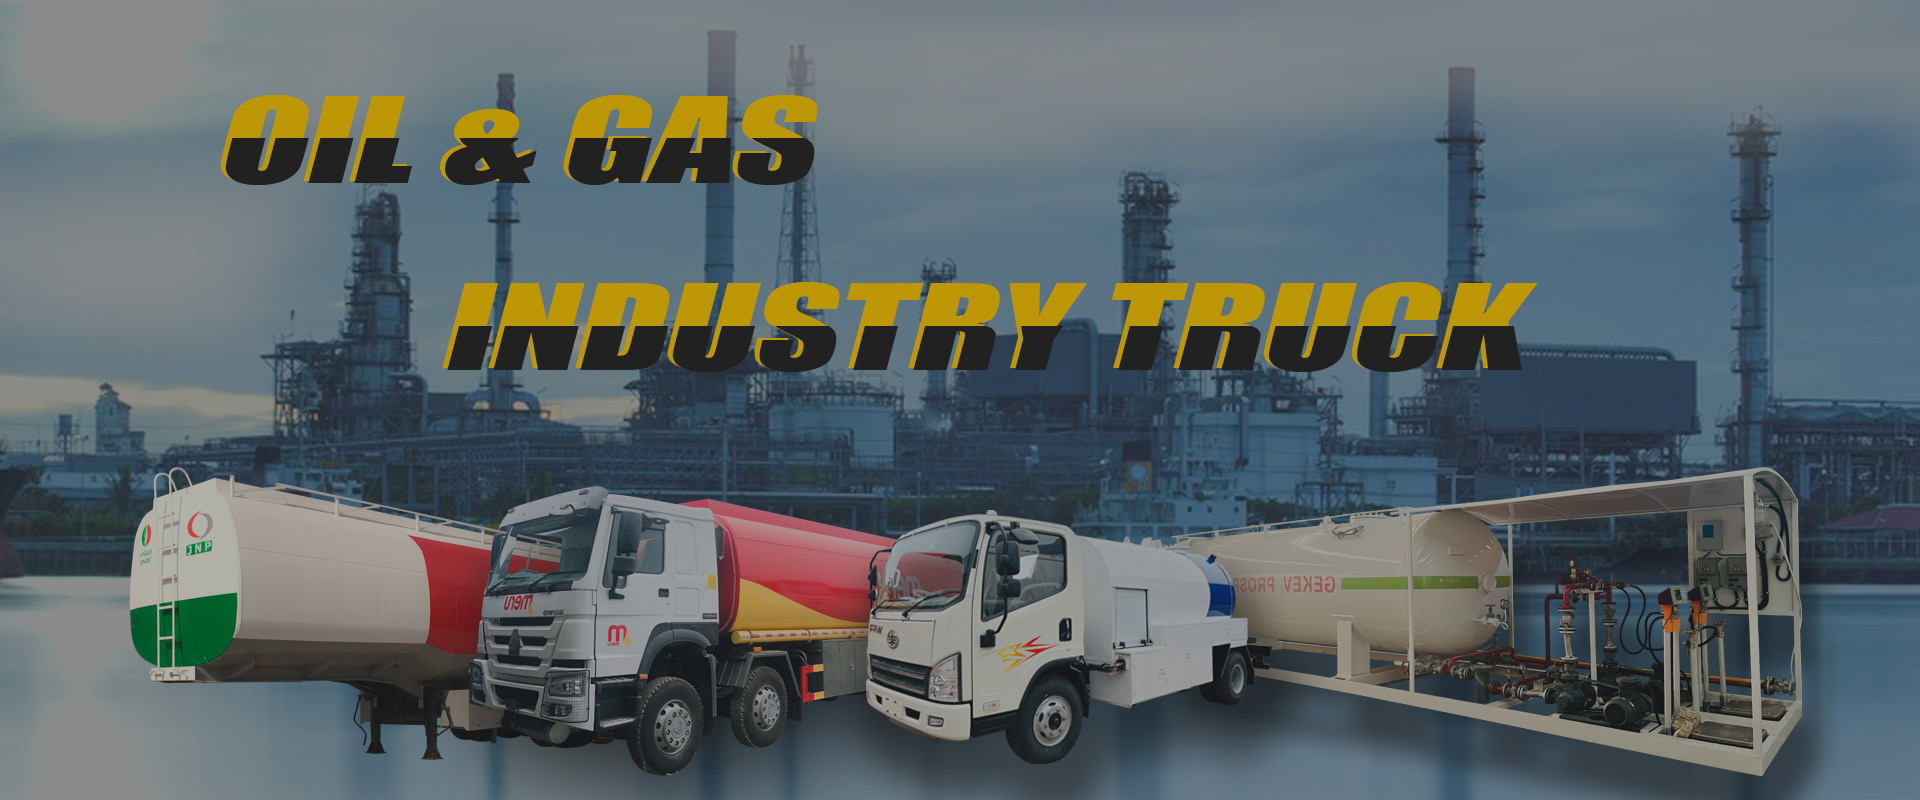 Oil & Gas Industry Truck